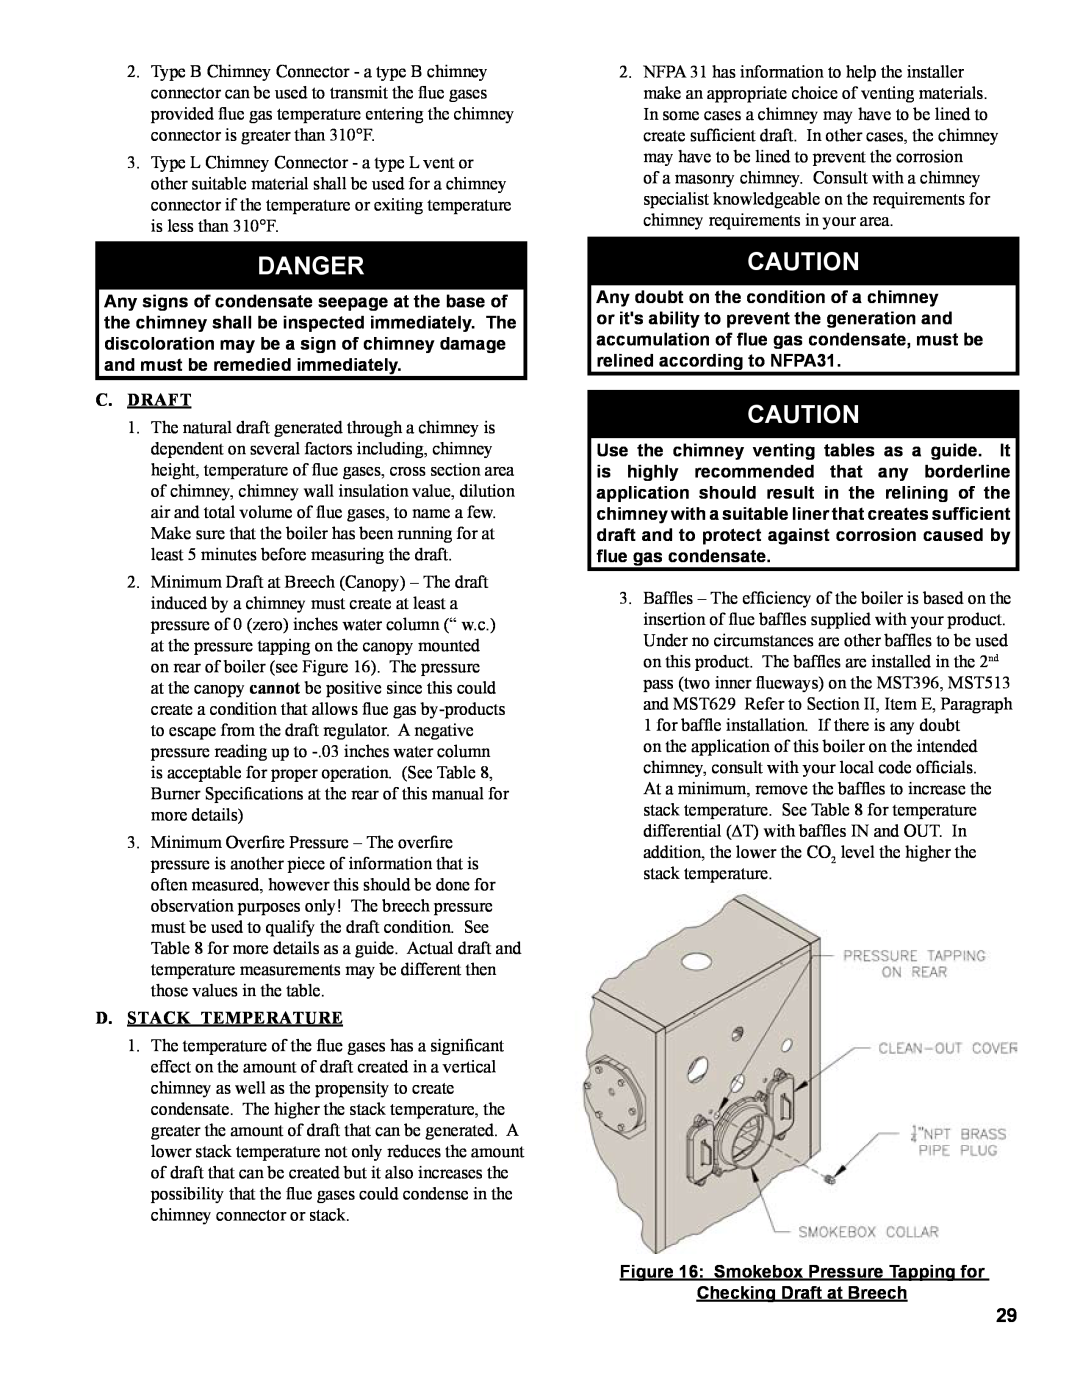 Burnham MST396, MST288 manual Danger, C. Draft, D. Stack Temperature, Smokebox Pressure Tapping for Checking Draft at Breech 